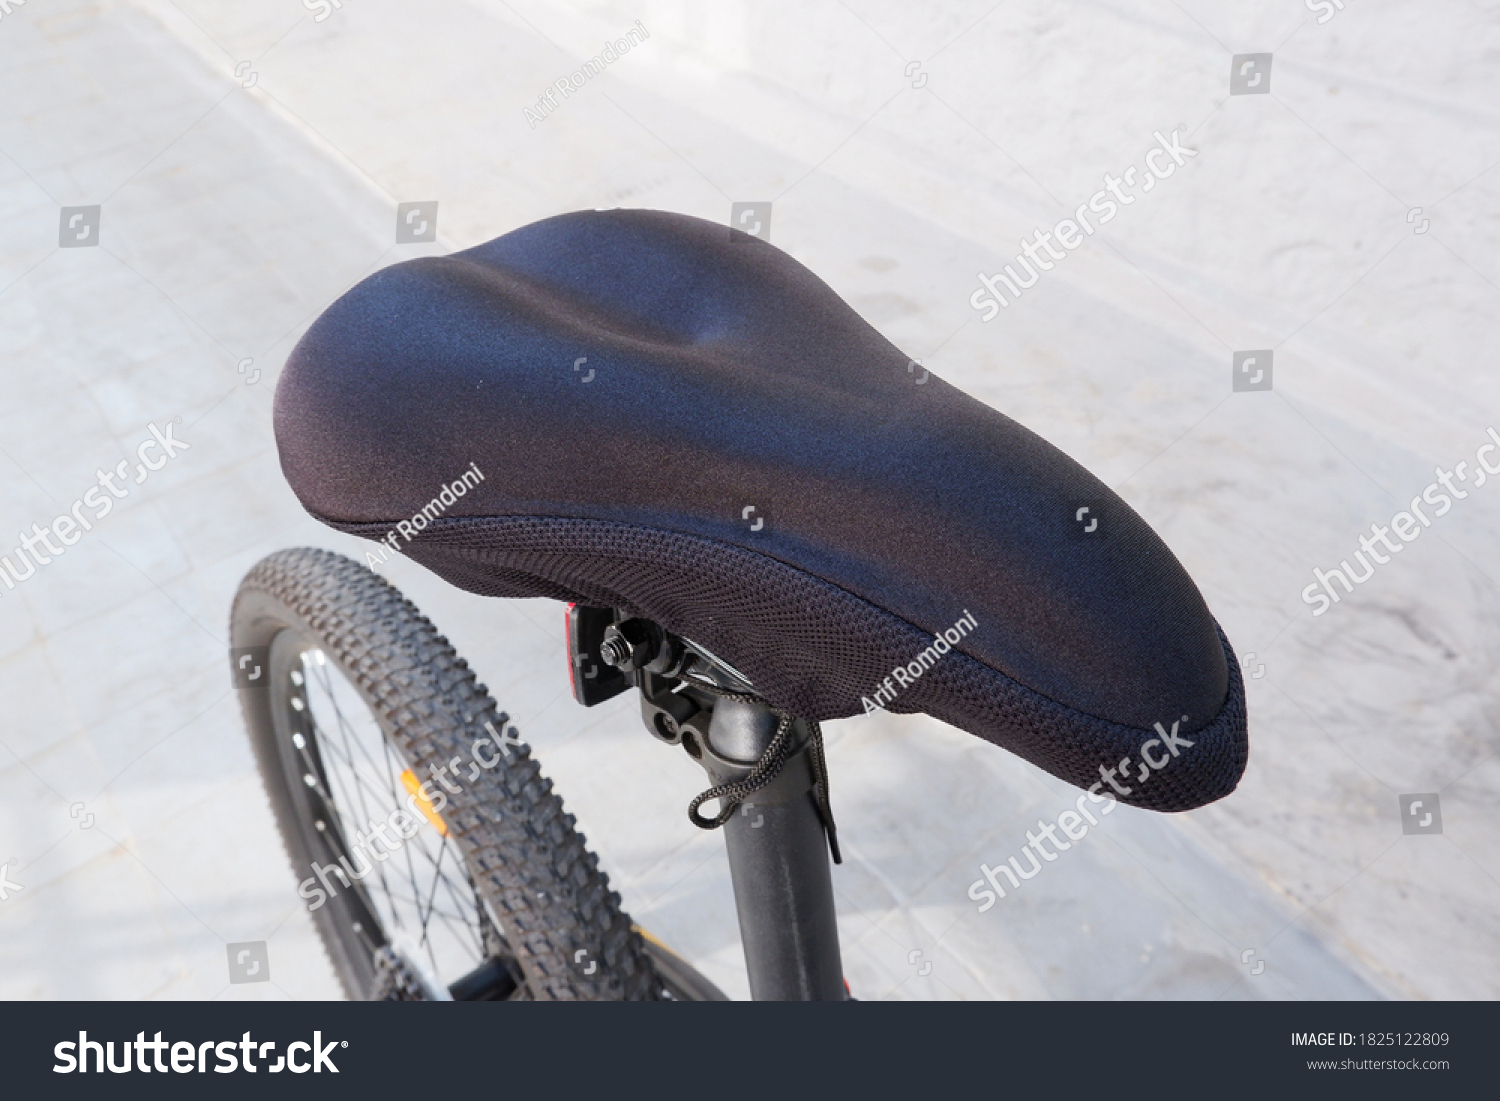 Closeup of a bicycle saddle. Bicycle seat. #1825122809